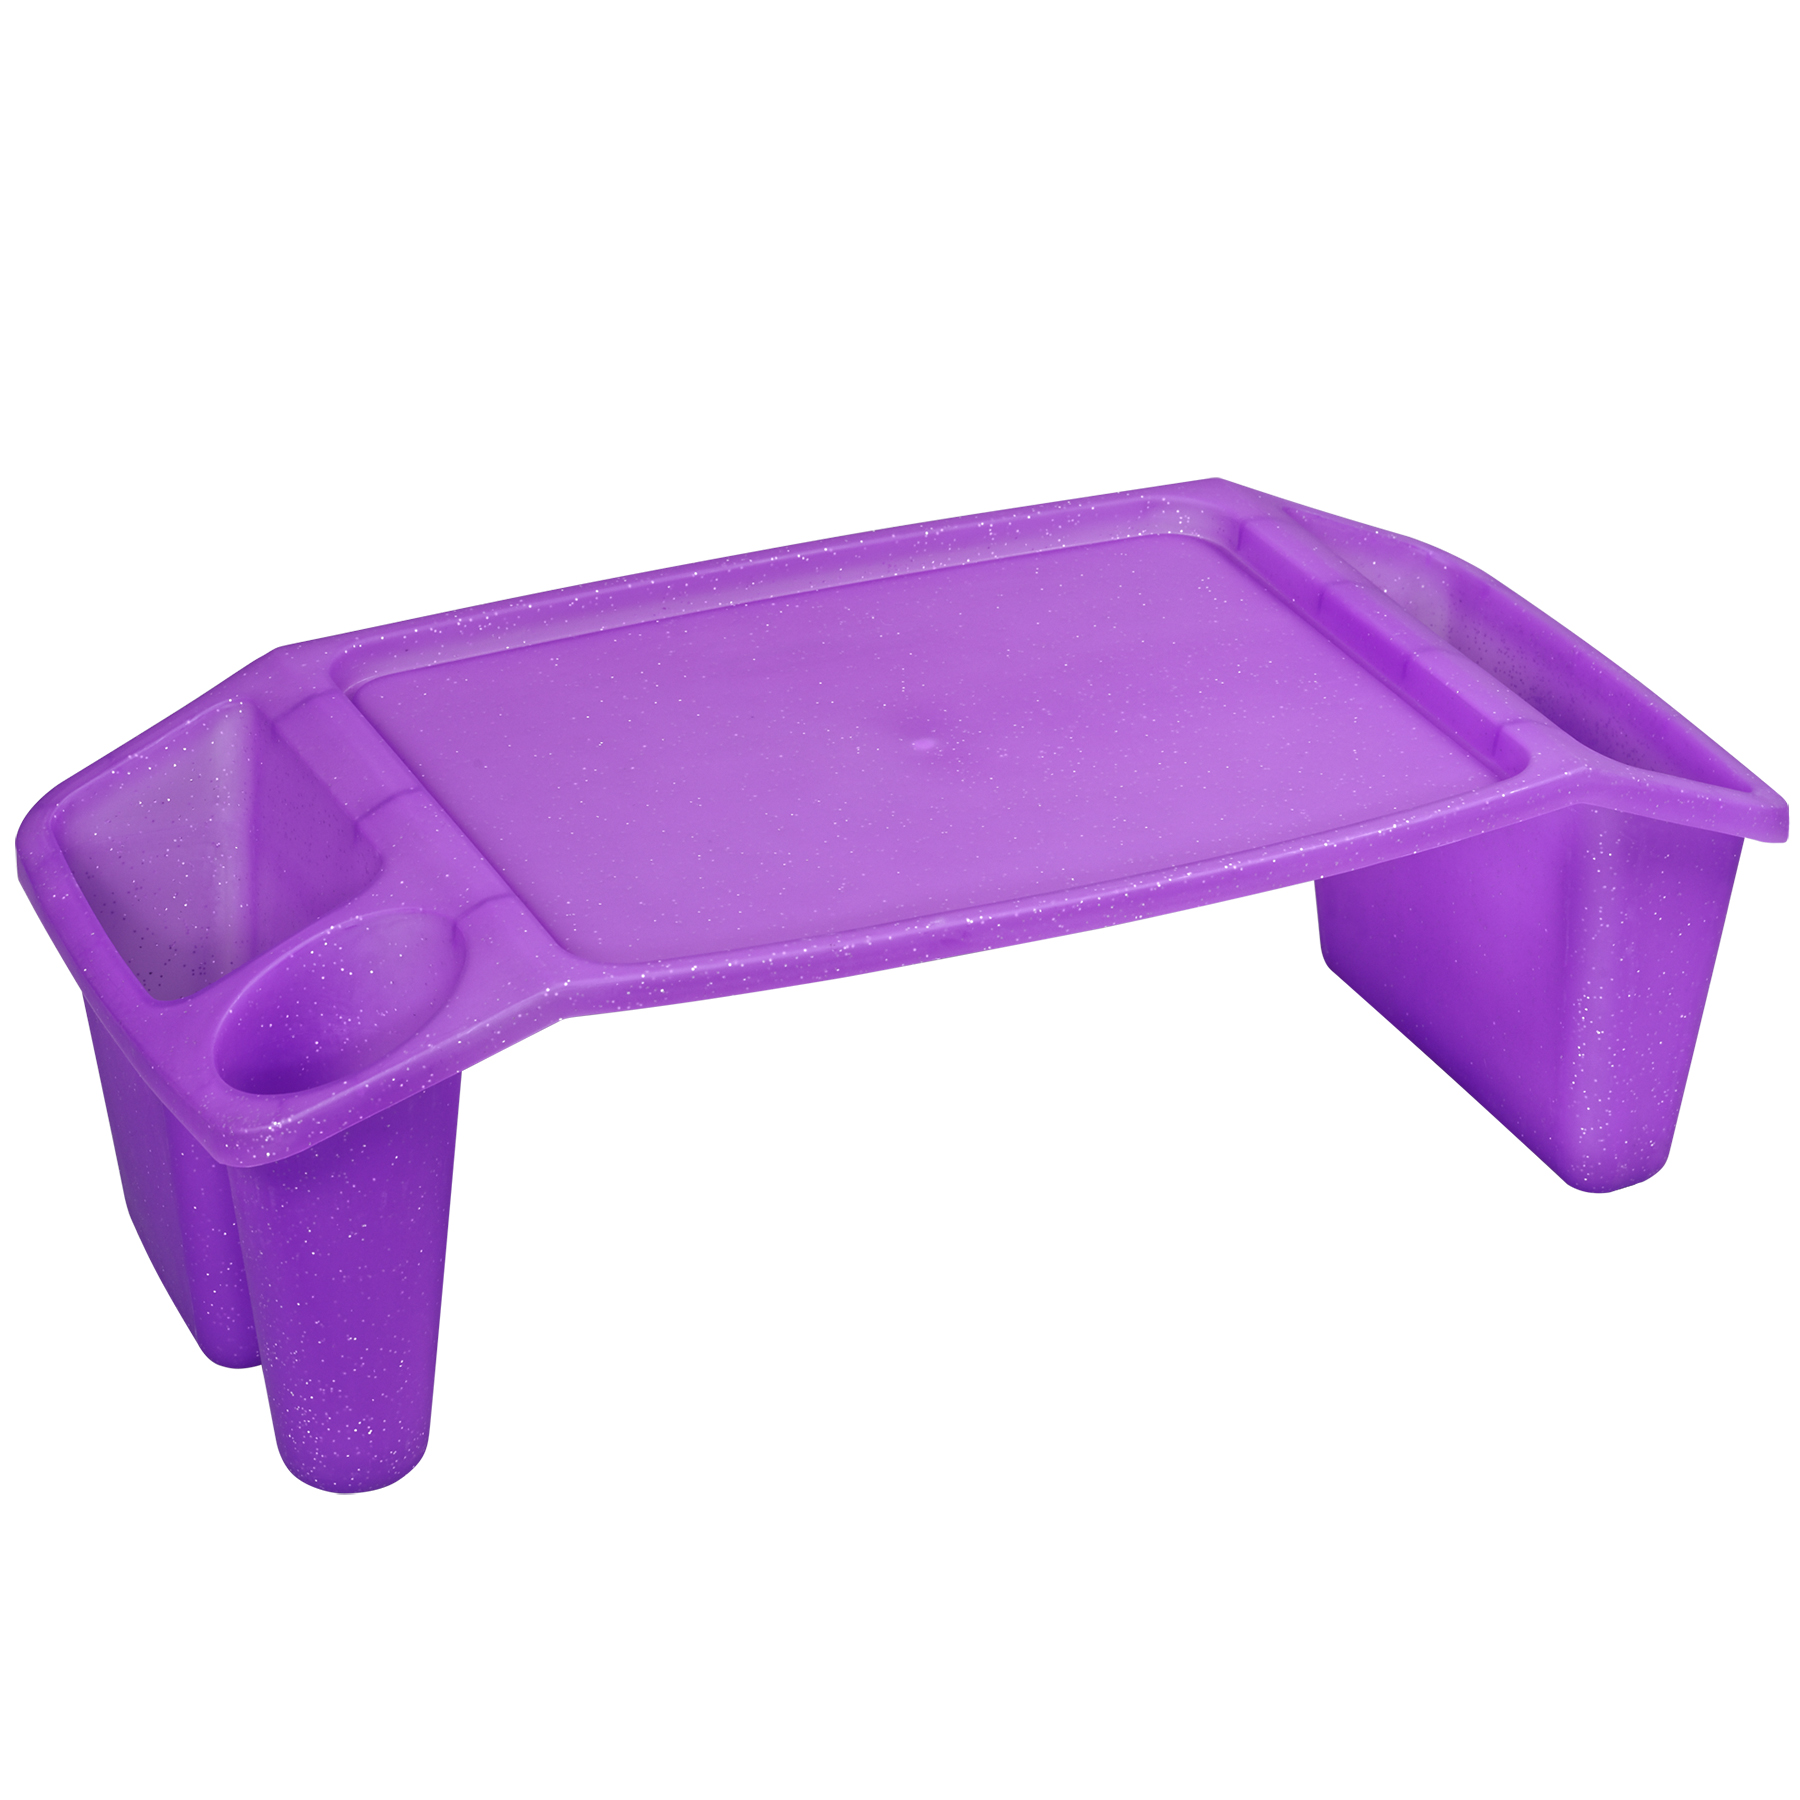 Plastic Lap Desk For Kids Desk Design Ideas